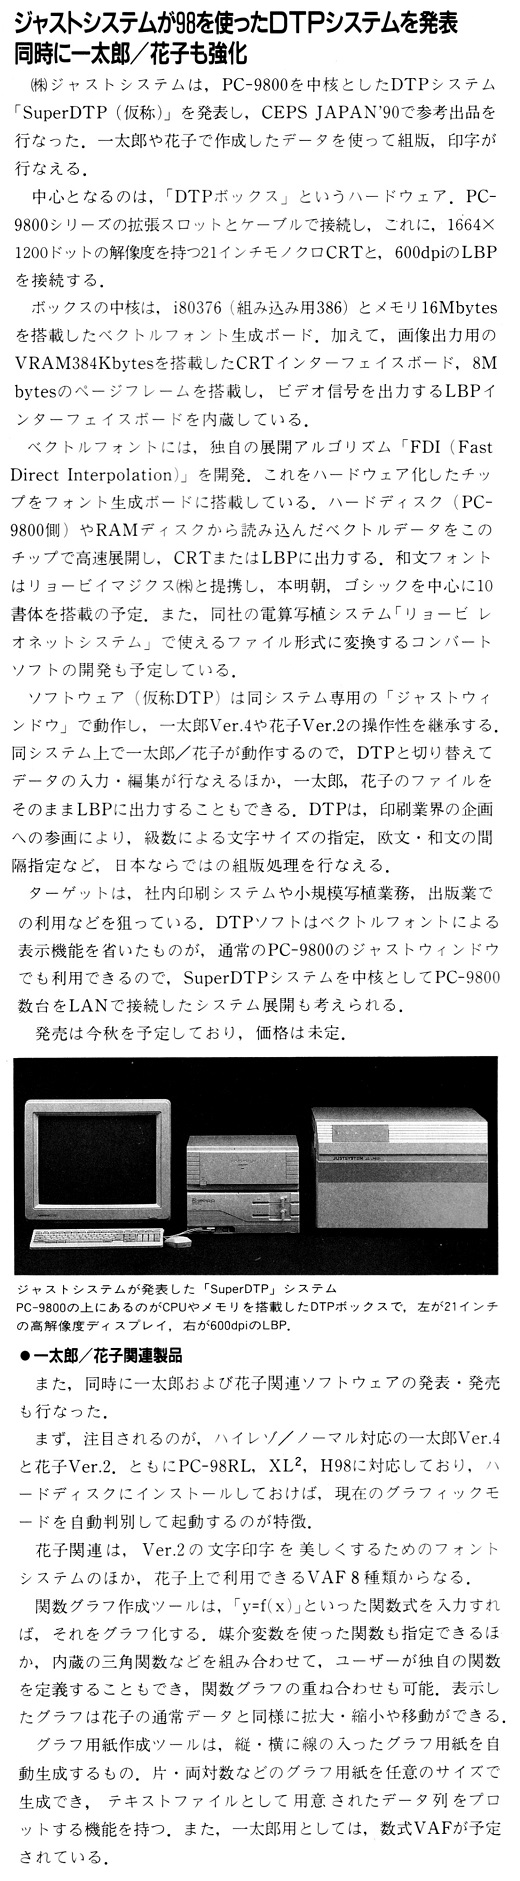 ASCII1990(05)b16ジャストシステムDTP_W520.jpg